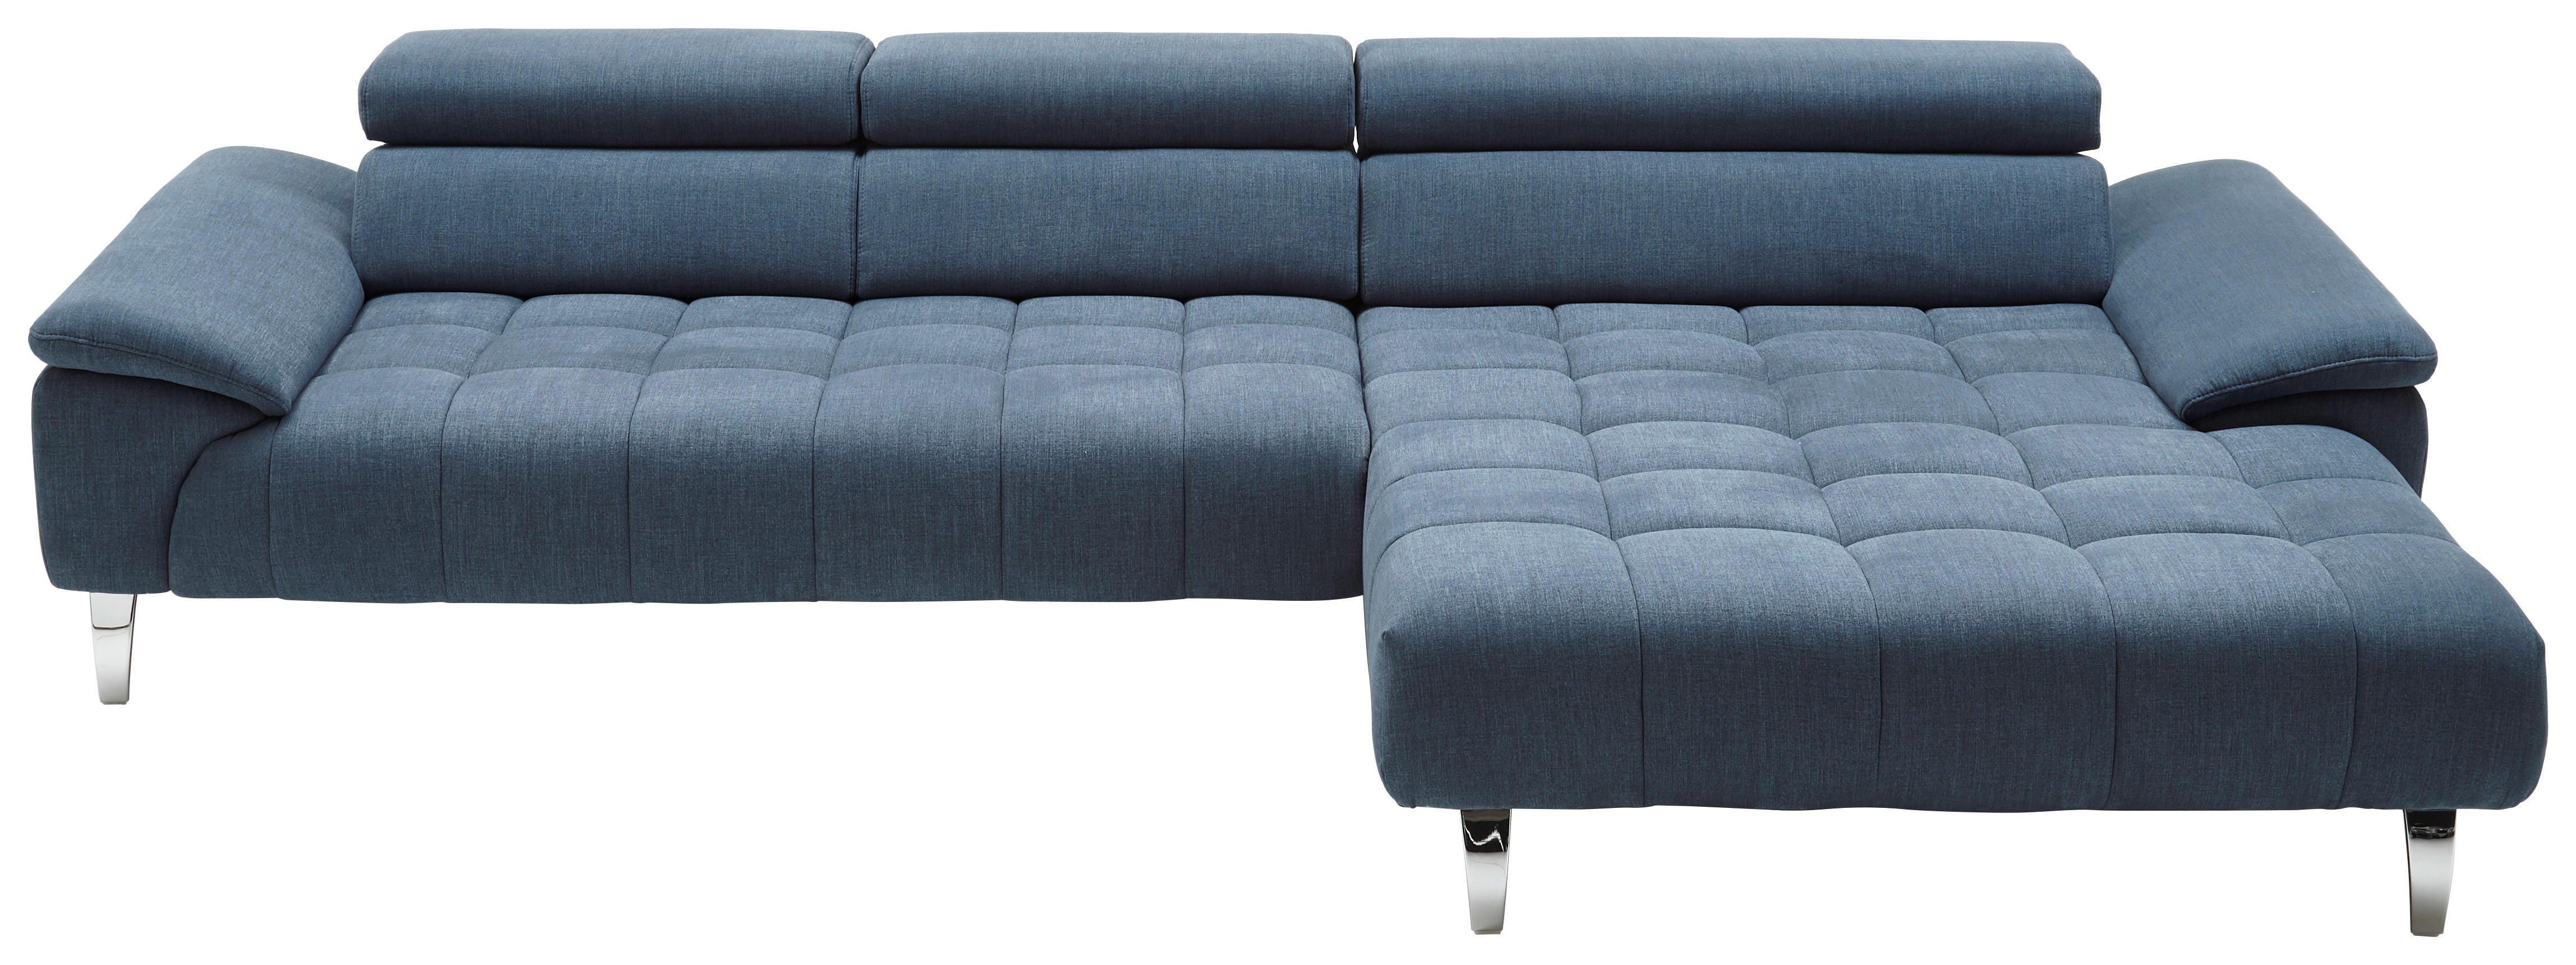 ECKSOFA Blau Mikrofaser  - Chromfarben/Blau, Design, Textil (329/190cm) - Beldomo Style